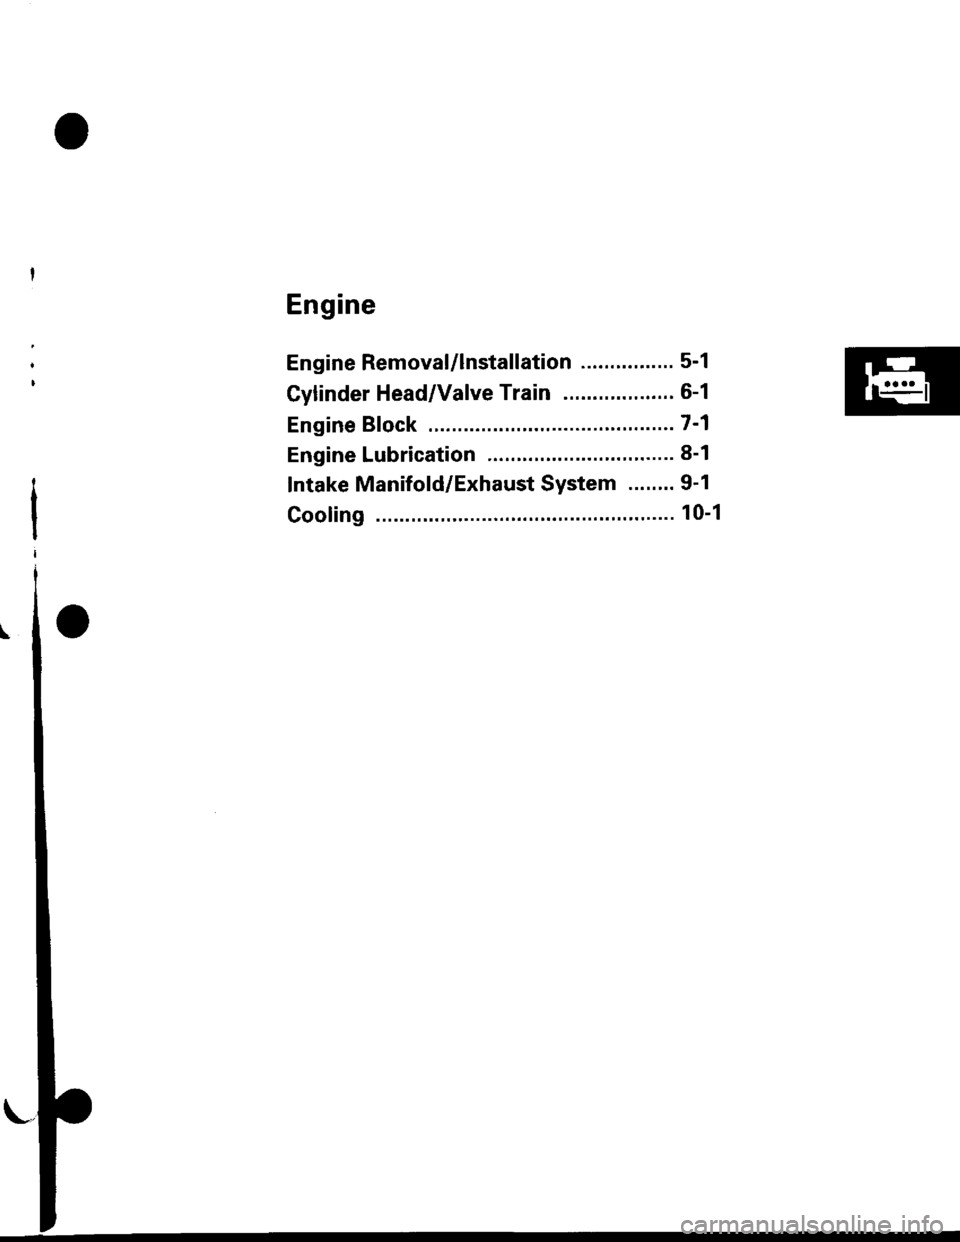 HONDA CIVIC 1996 6.G Service Manual Engine
Engine Removal/lnstallation ................ 5-1
Gylinder Head/Valve Train ................... 6-1
Engine Bfock .......... ...........7-1
Engine Lubrication ........... 8-1
Intake Manifold/Exha